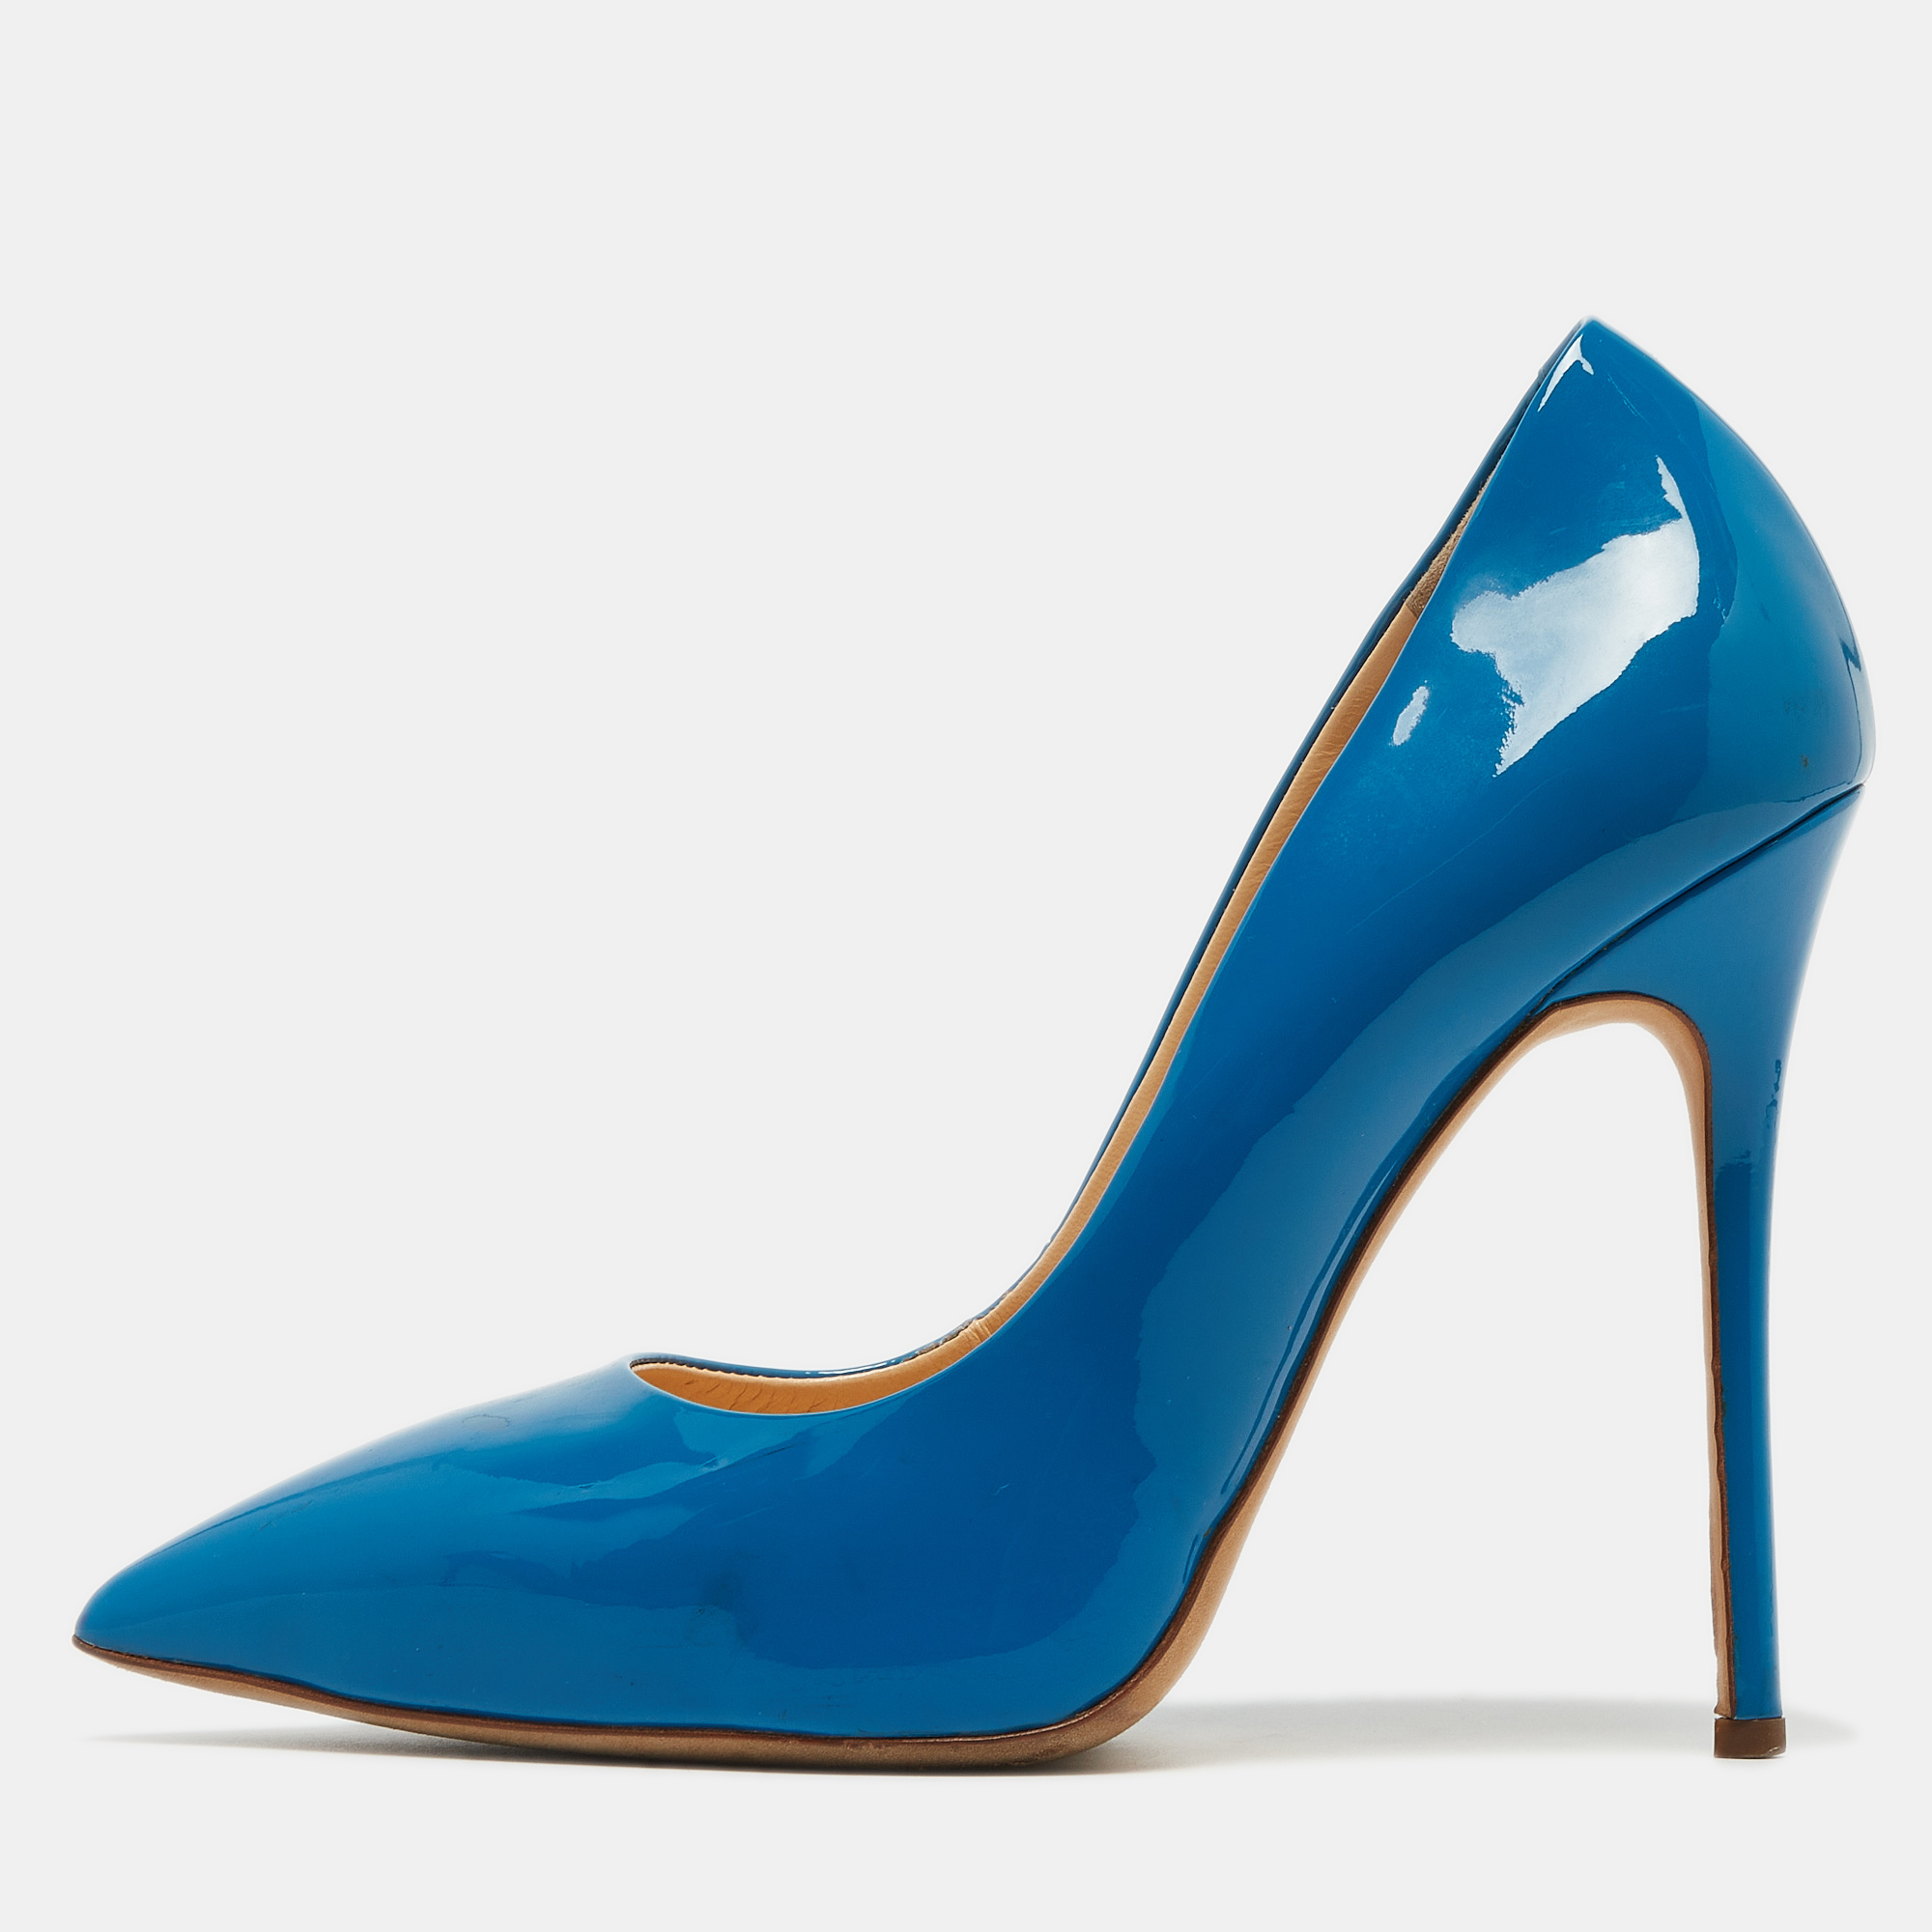 Giuseppe zanotti blue patent leather pointed toe pumps size 40